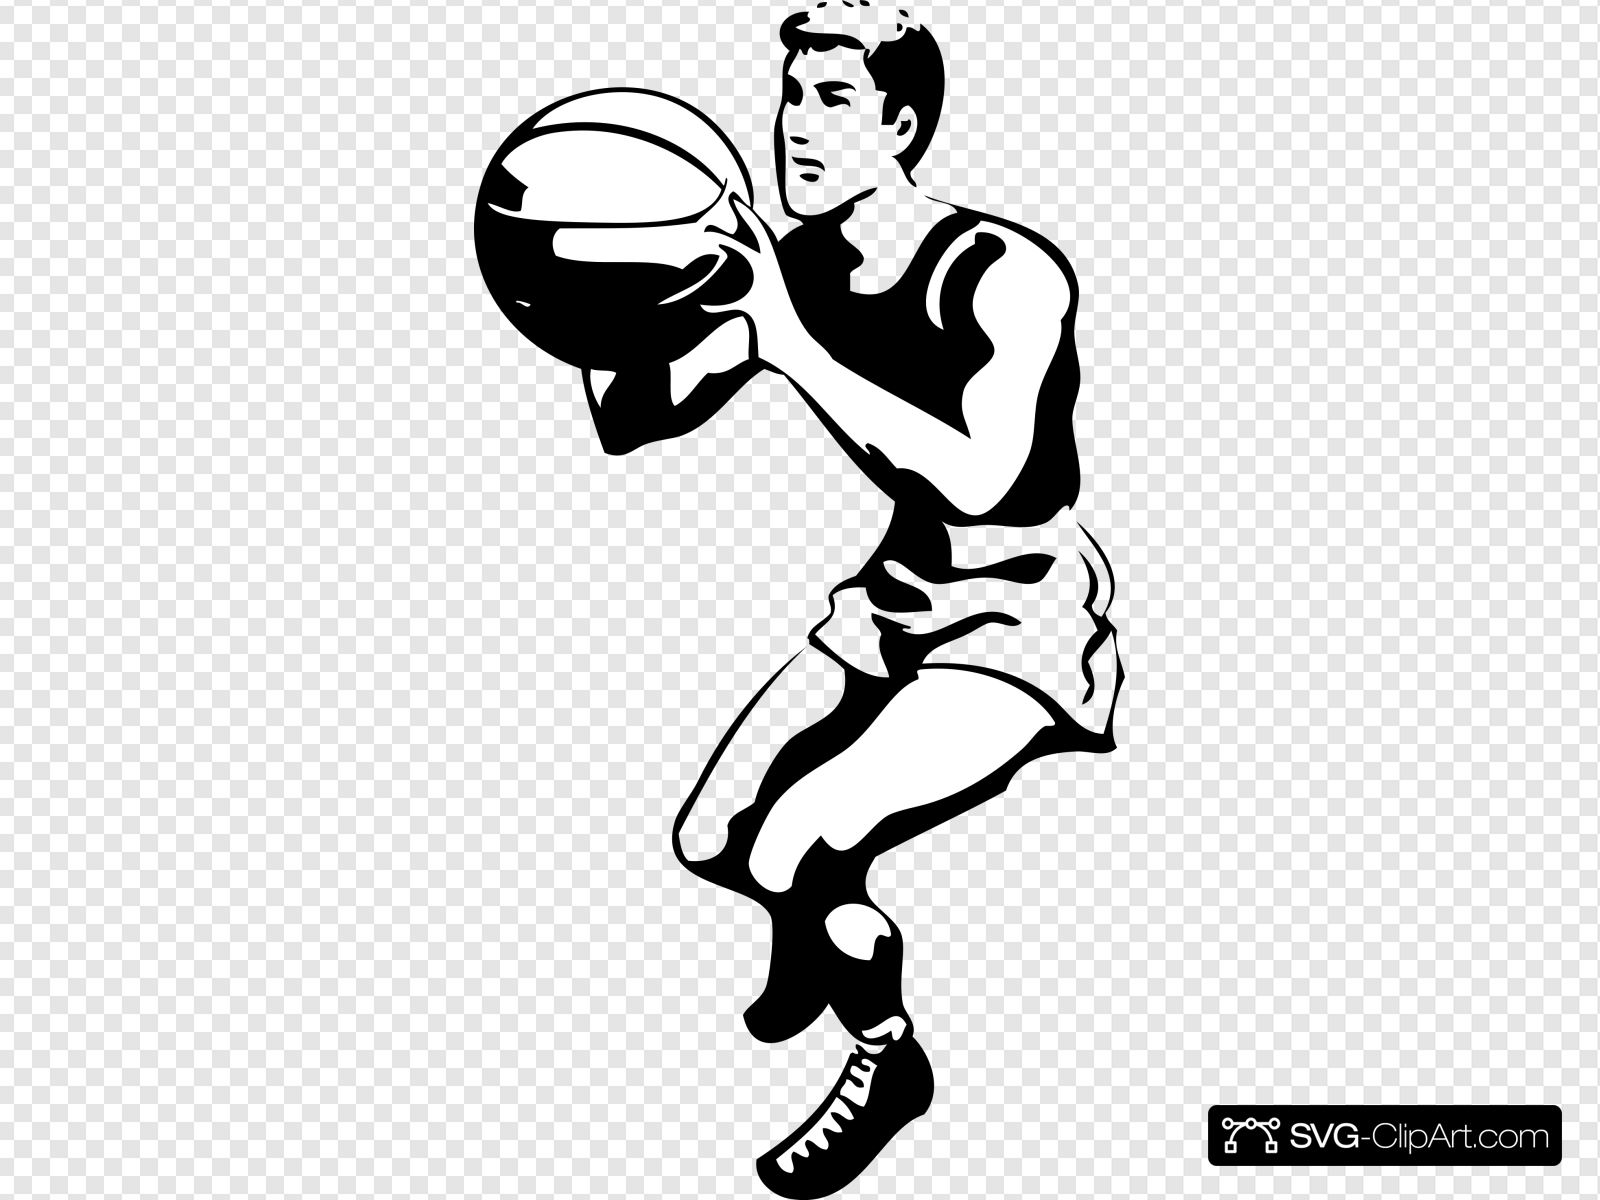 Basketball player clip.